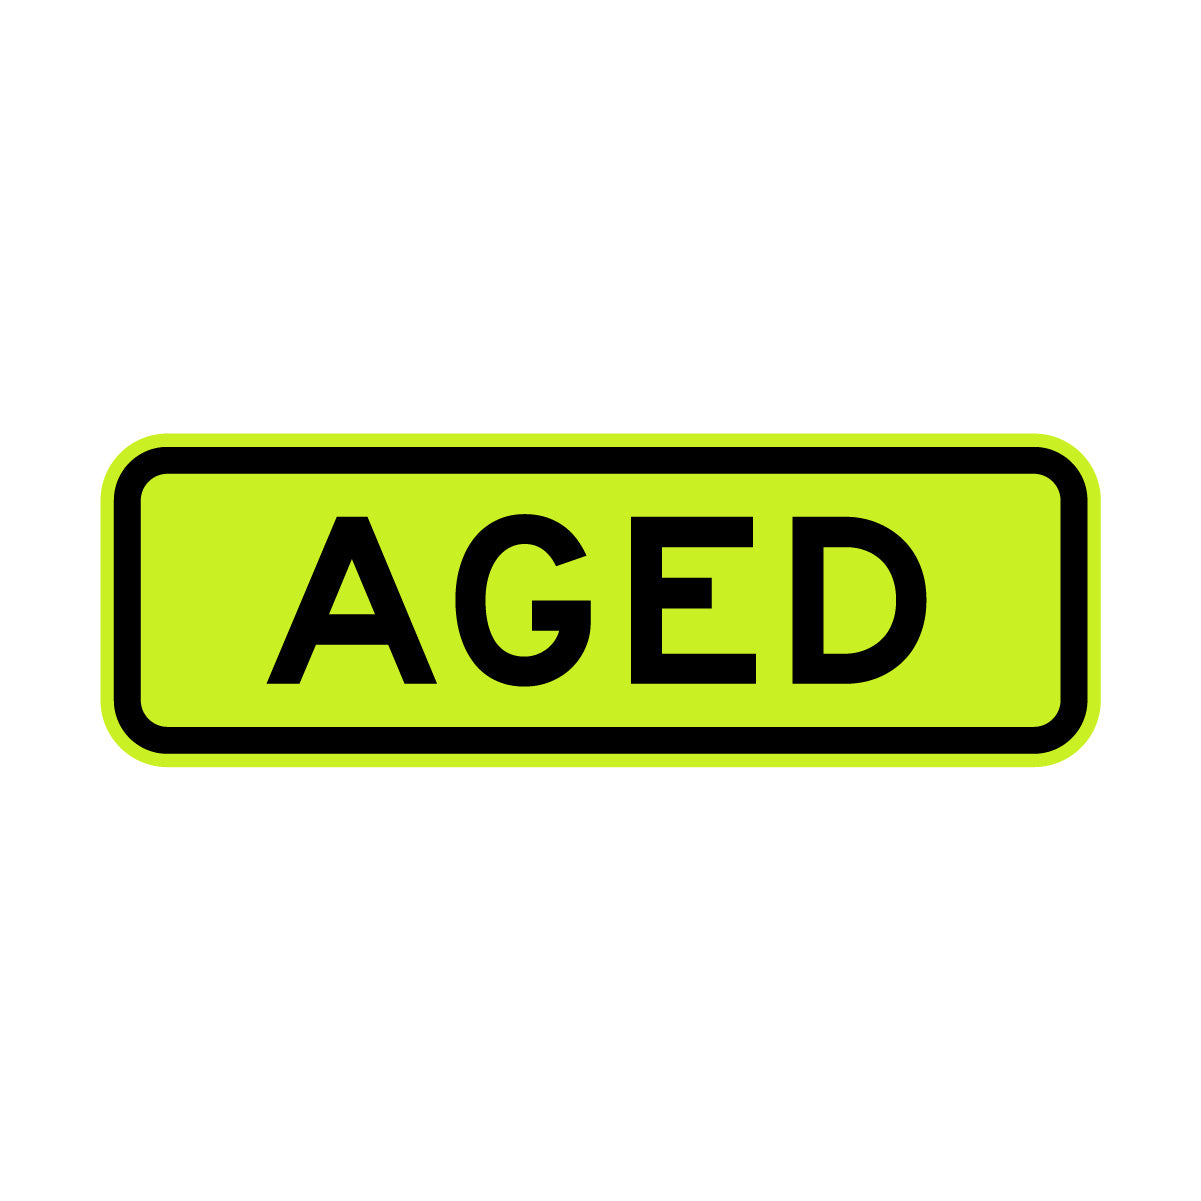 Warning: Aged Sign